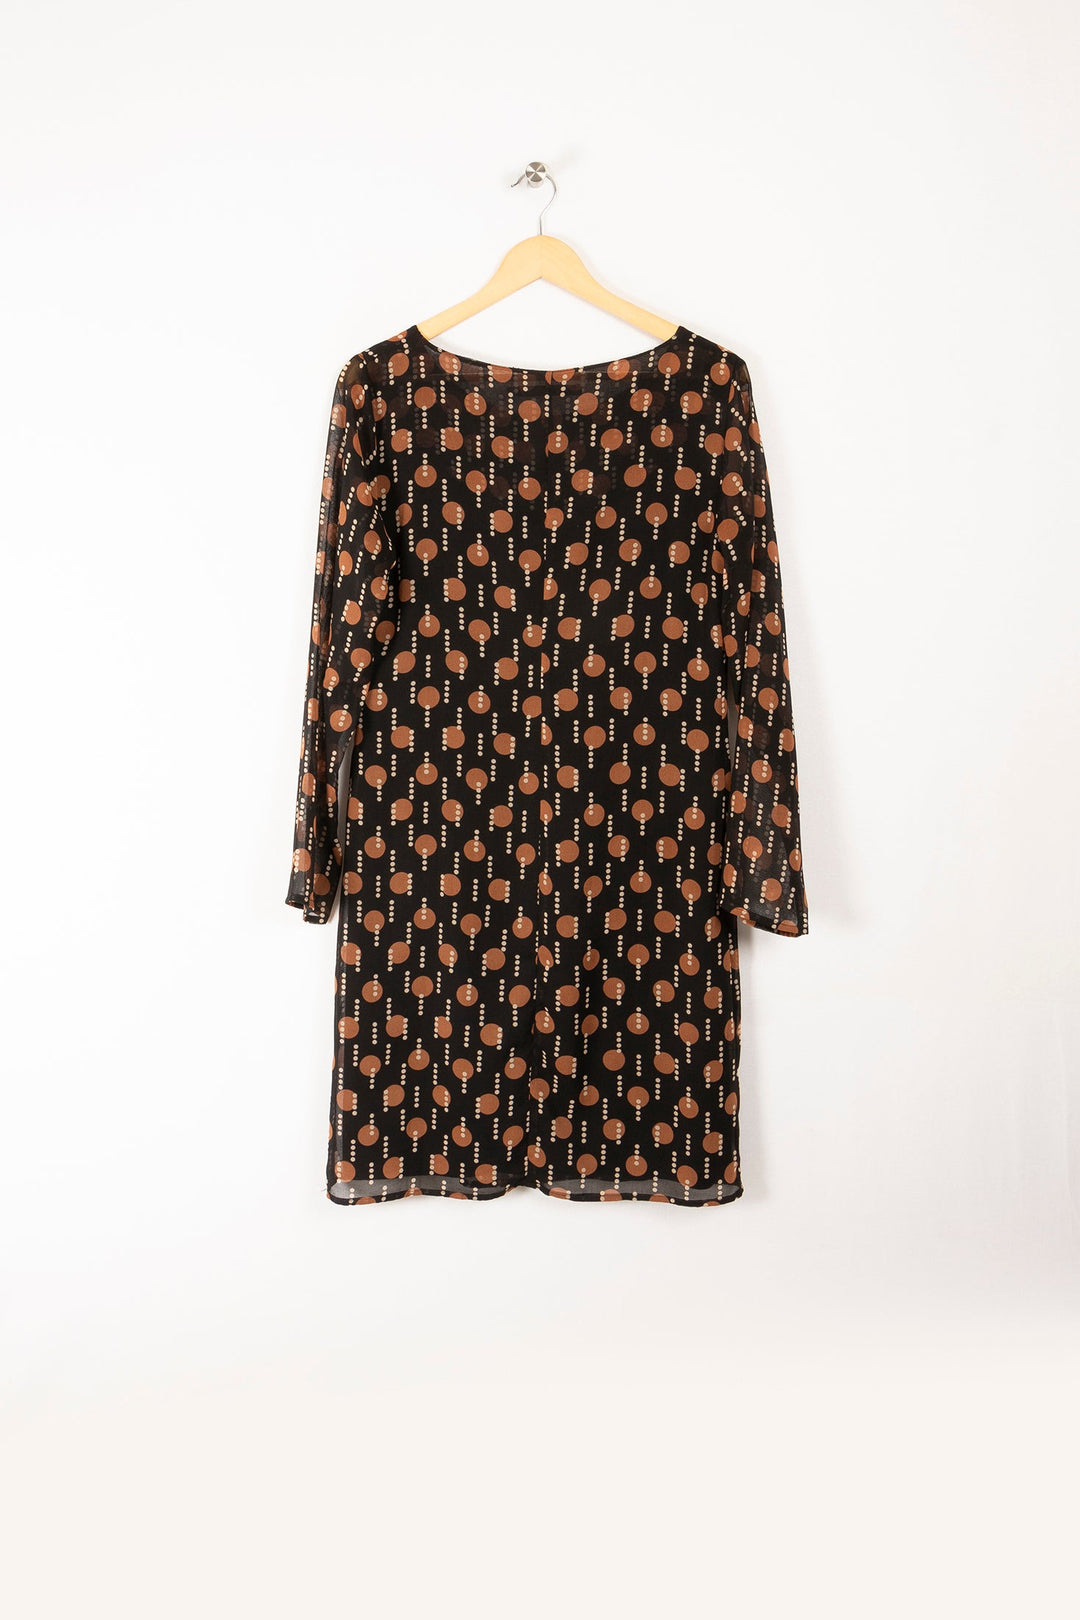 Pastille print dress - M/38